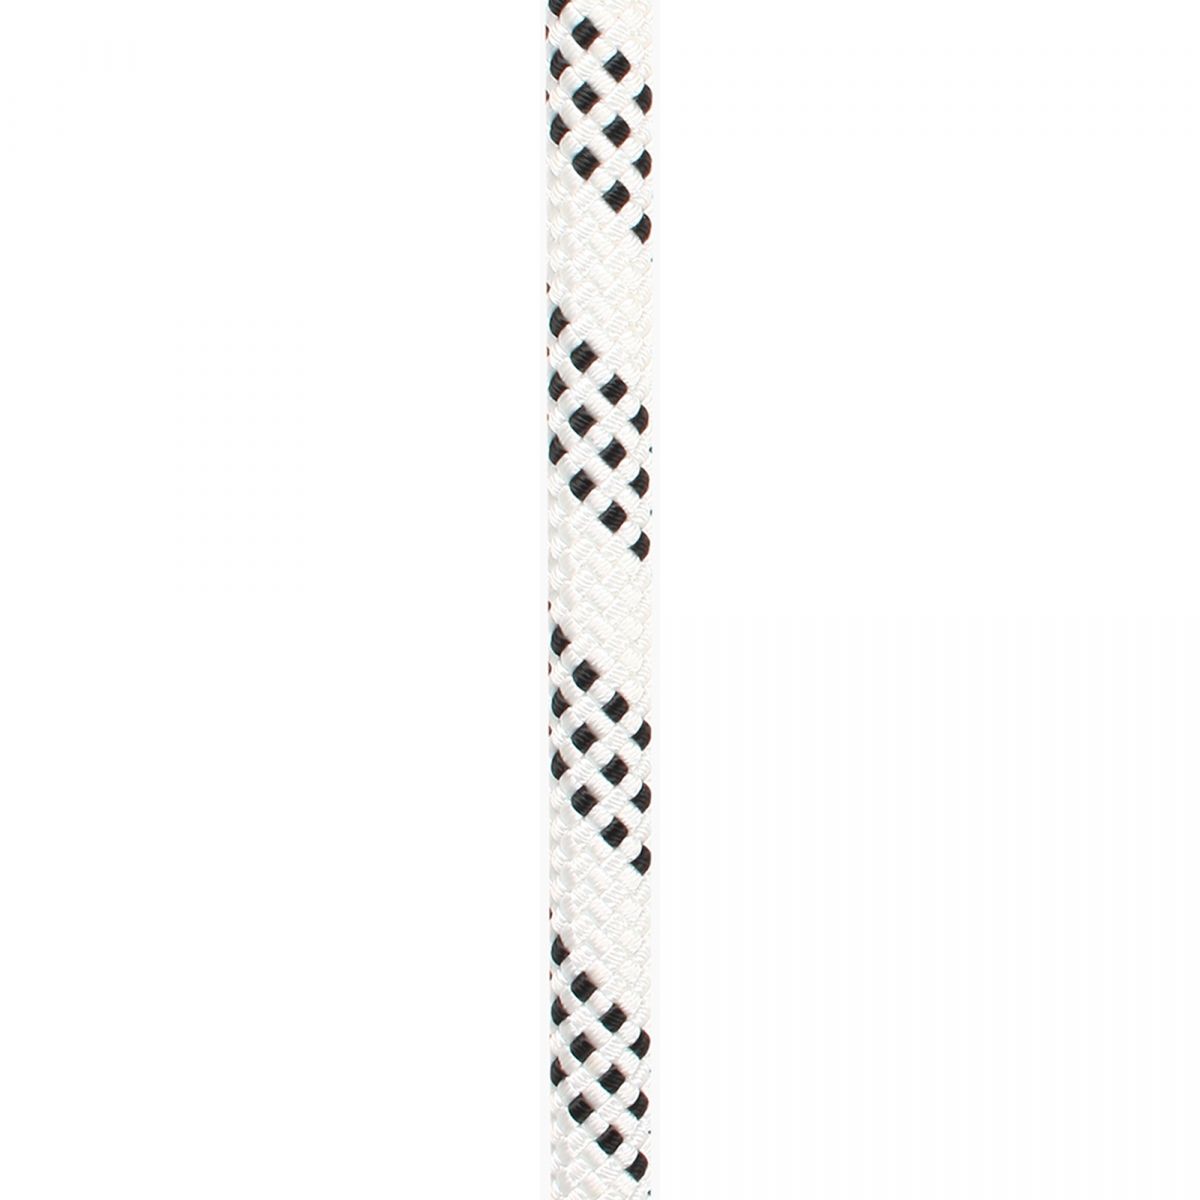 Edelweiss Proline 11mm 200m Blanca